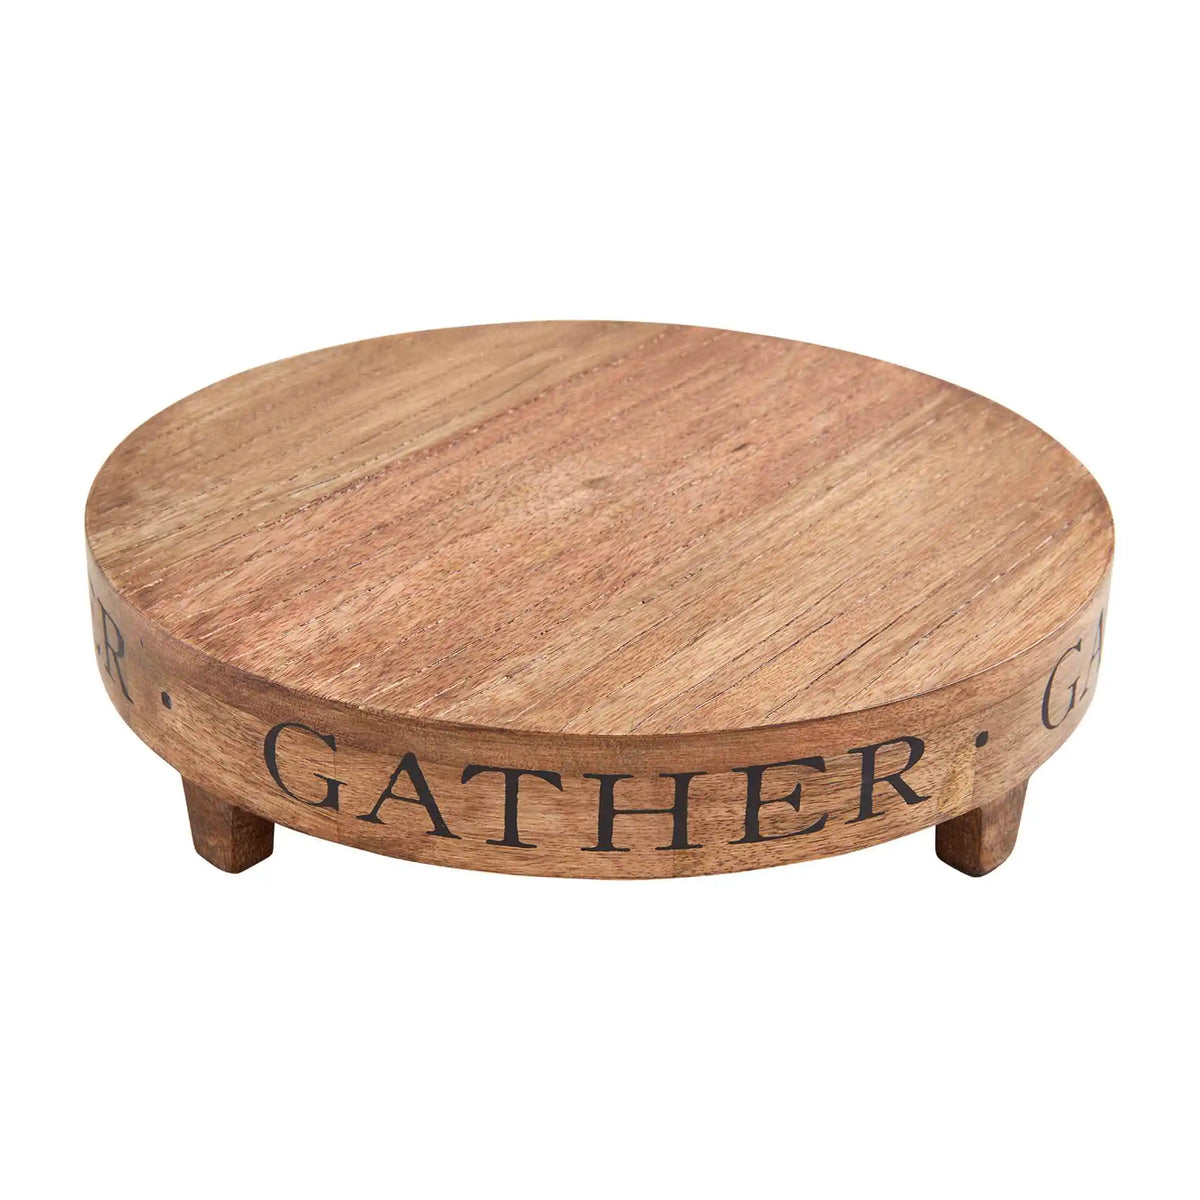 Gather Wood Riser